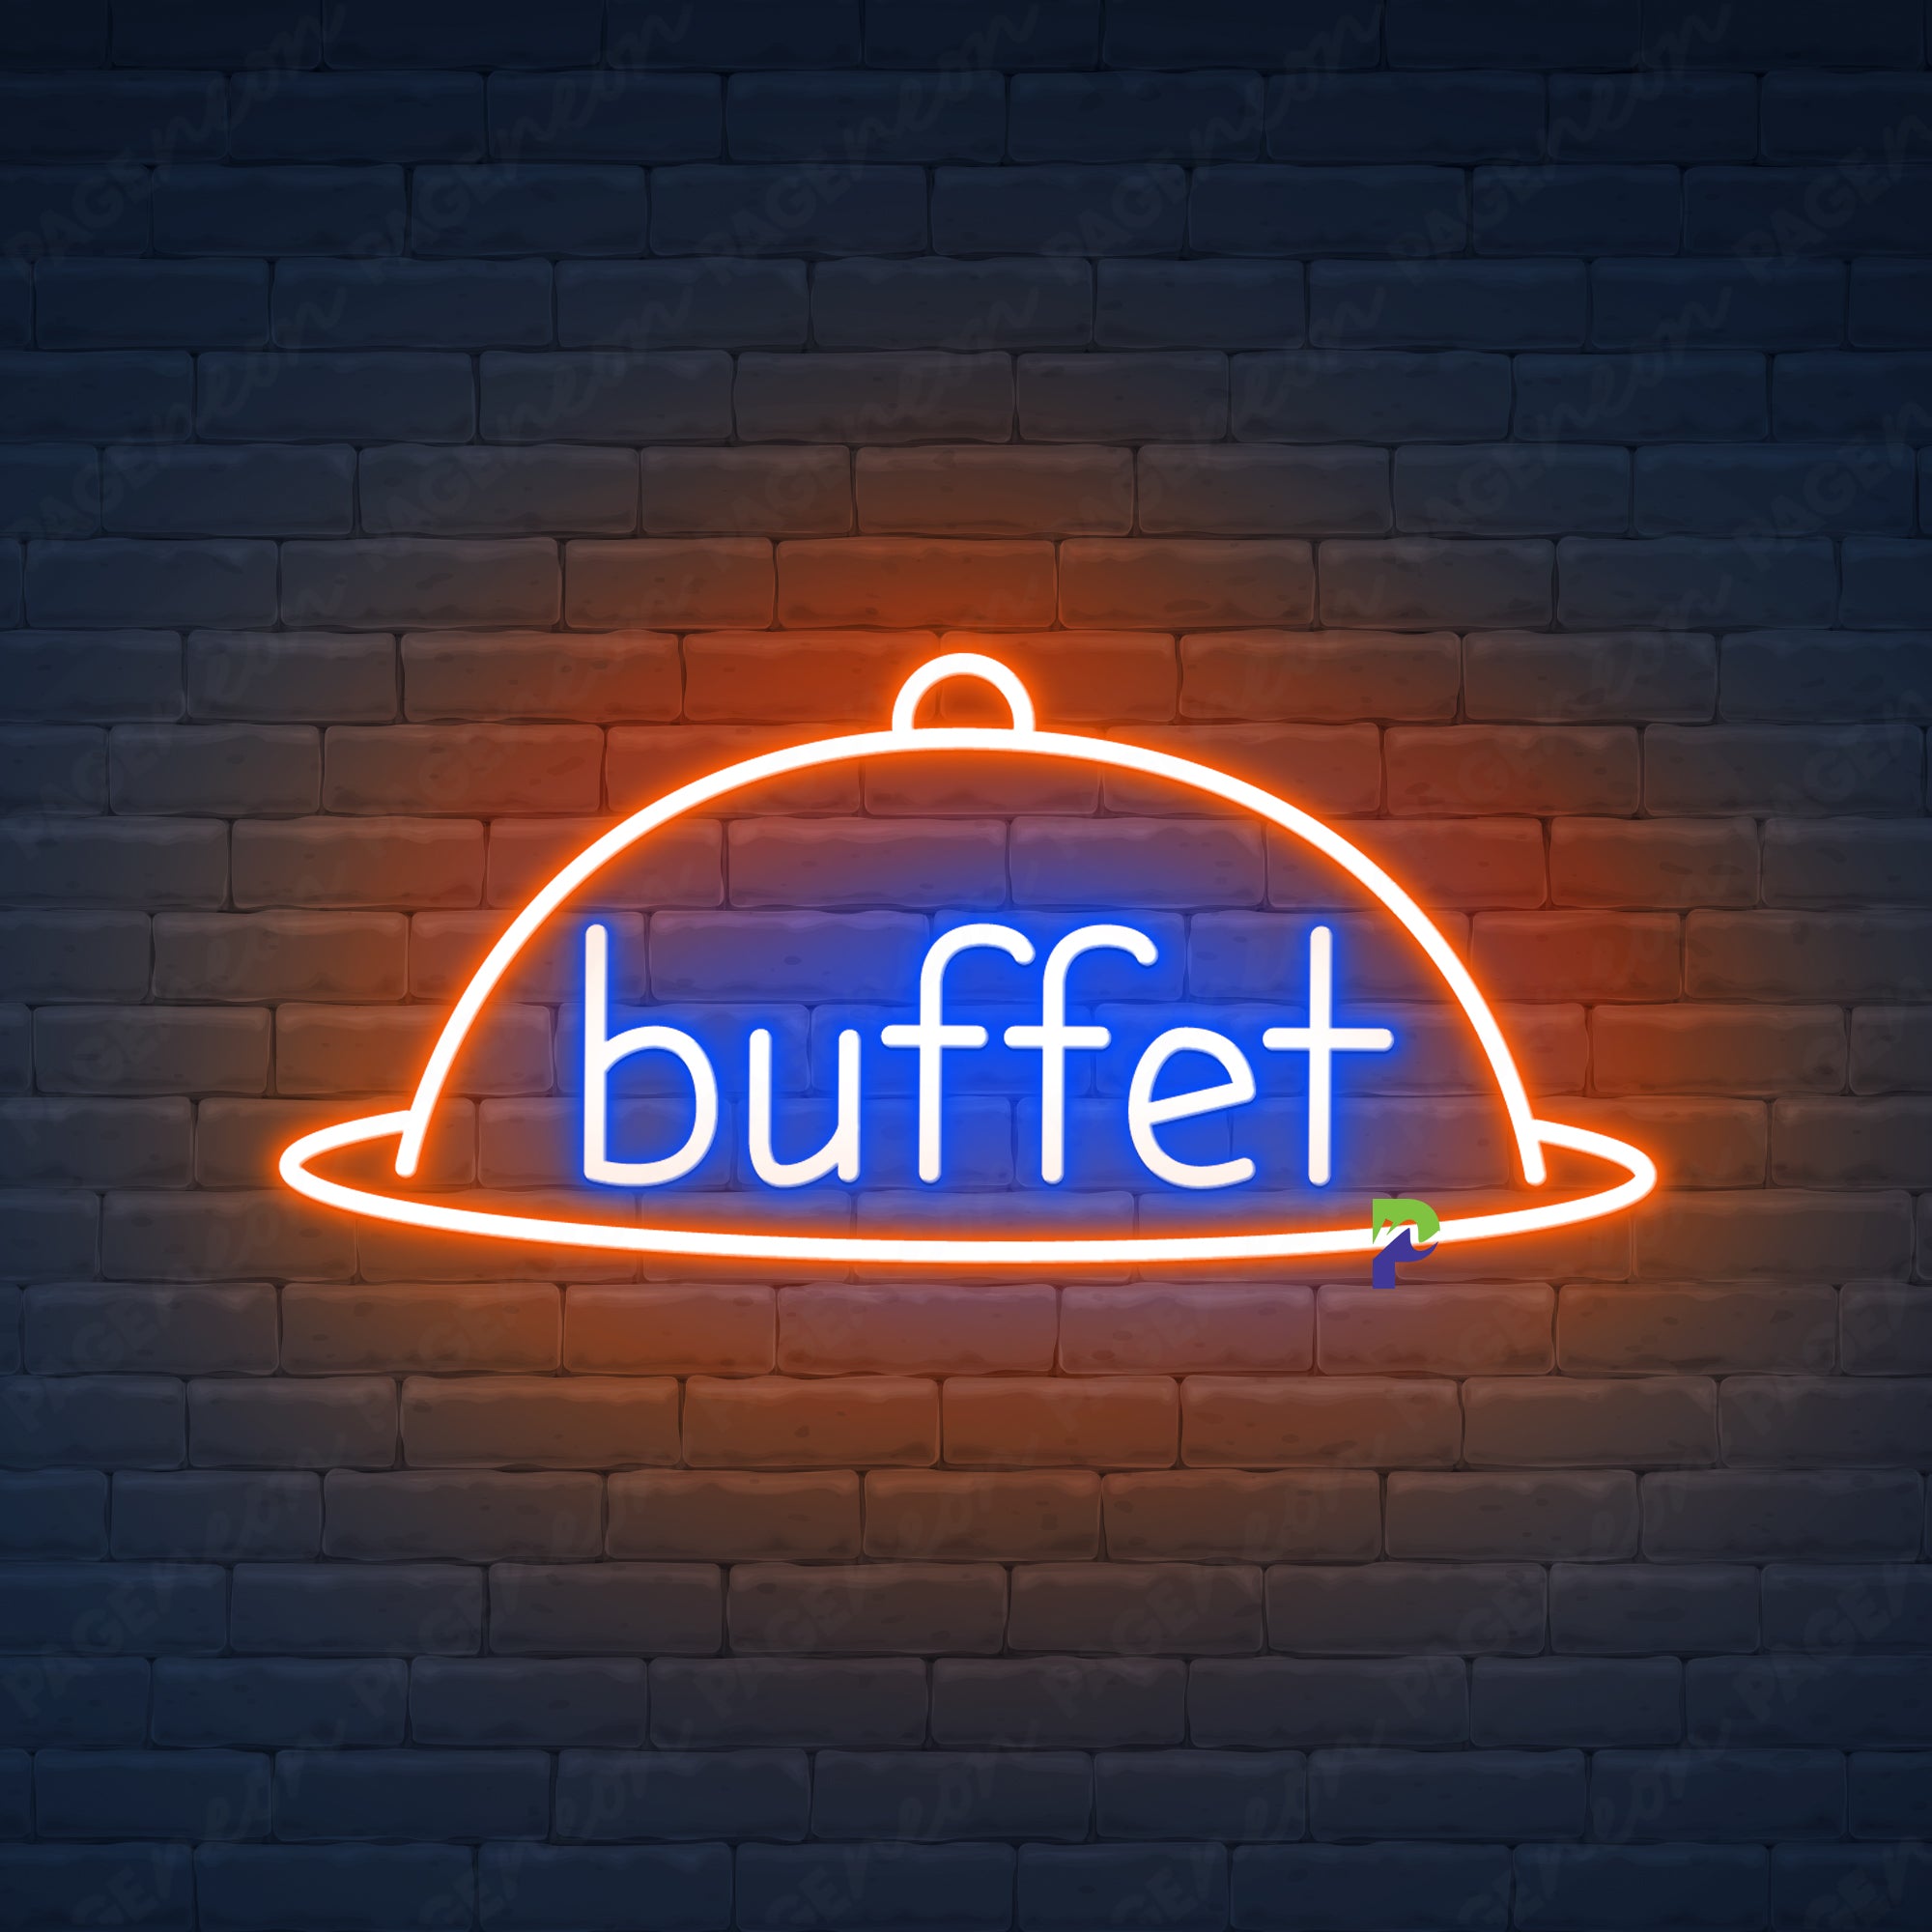 Buffet Neon Sign Business Big Led Light